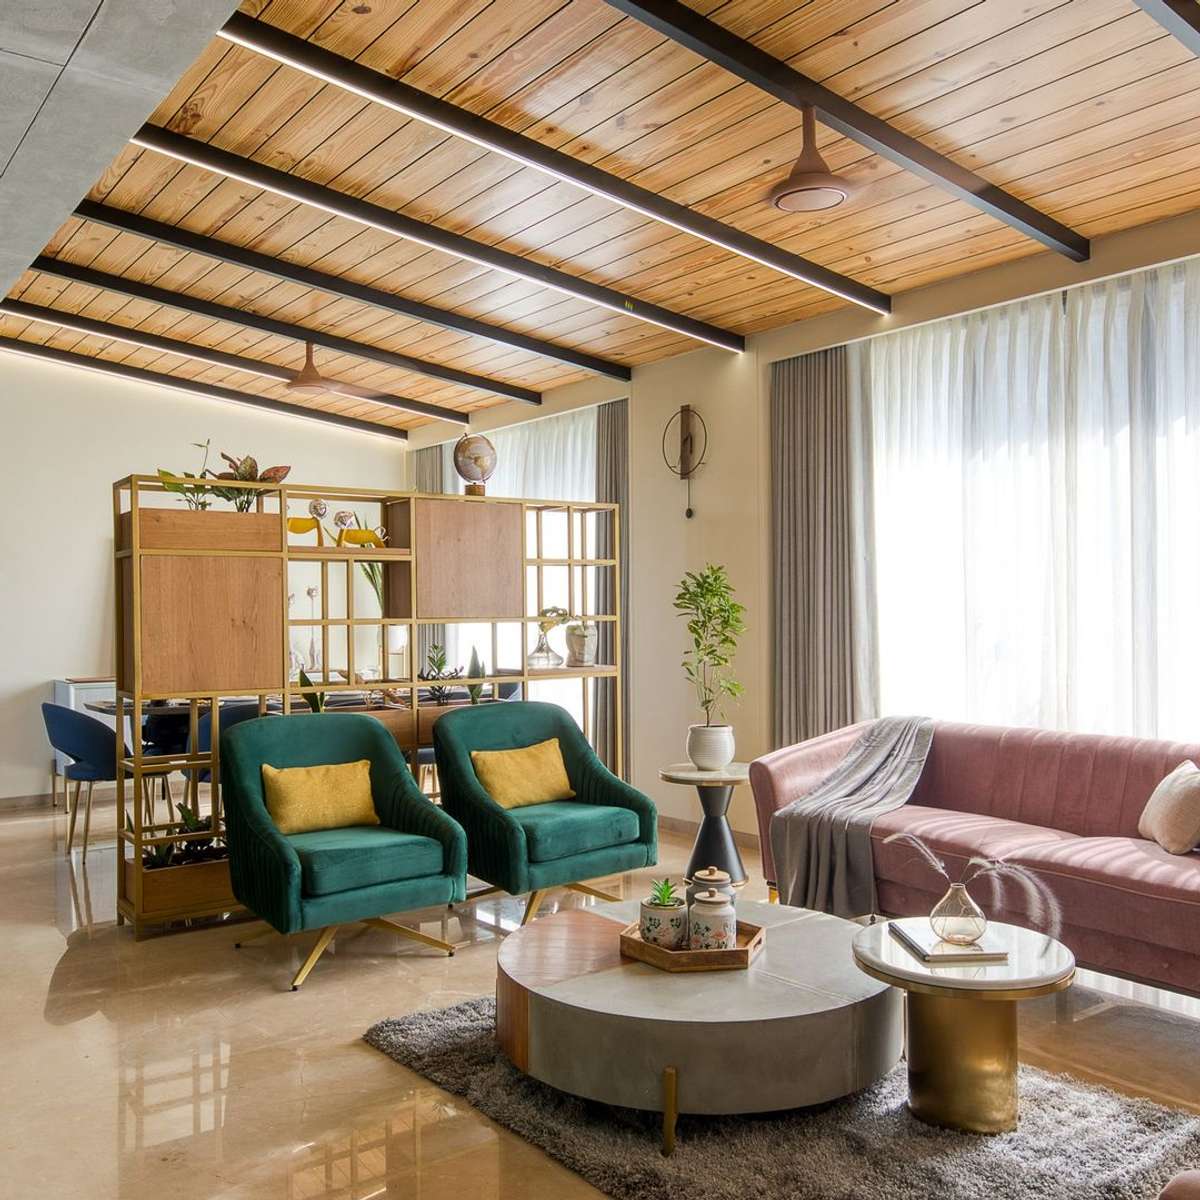 residential project  #LivingroomDesigns #KitchenCabinet #partitiondesign  #LivingRoomSofa